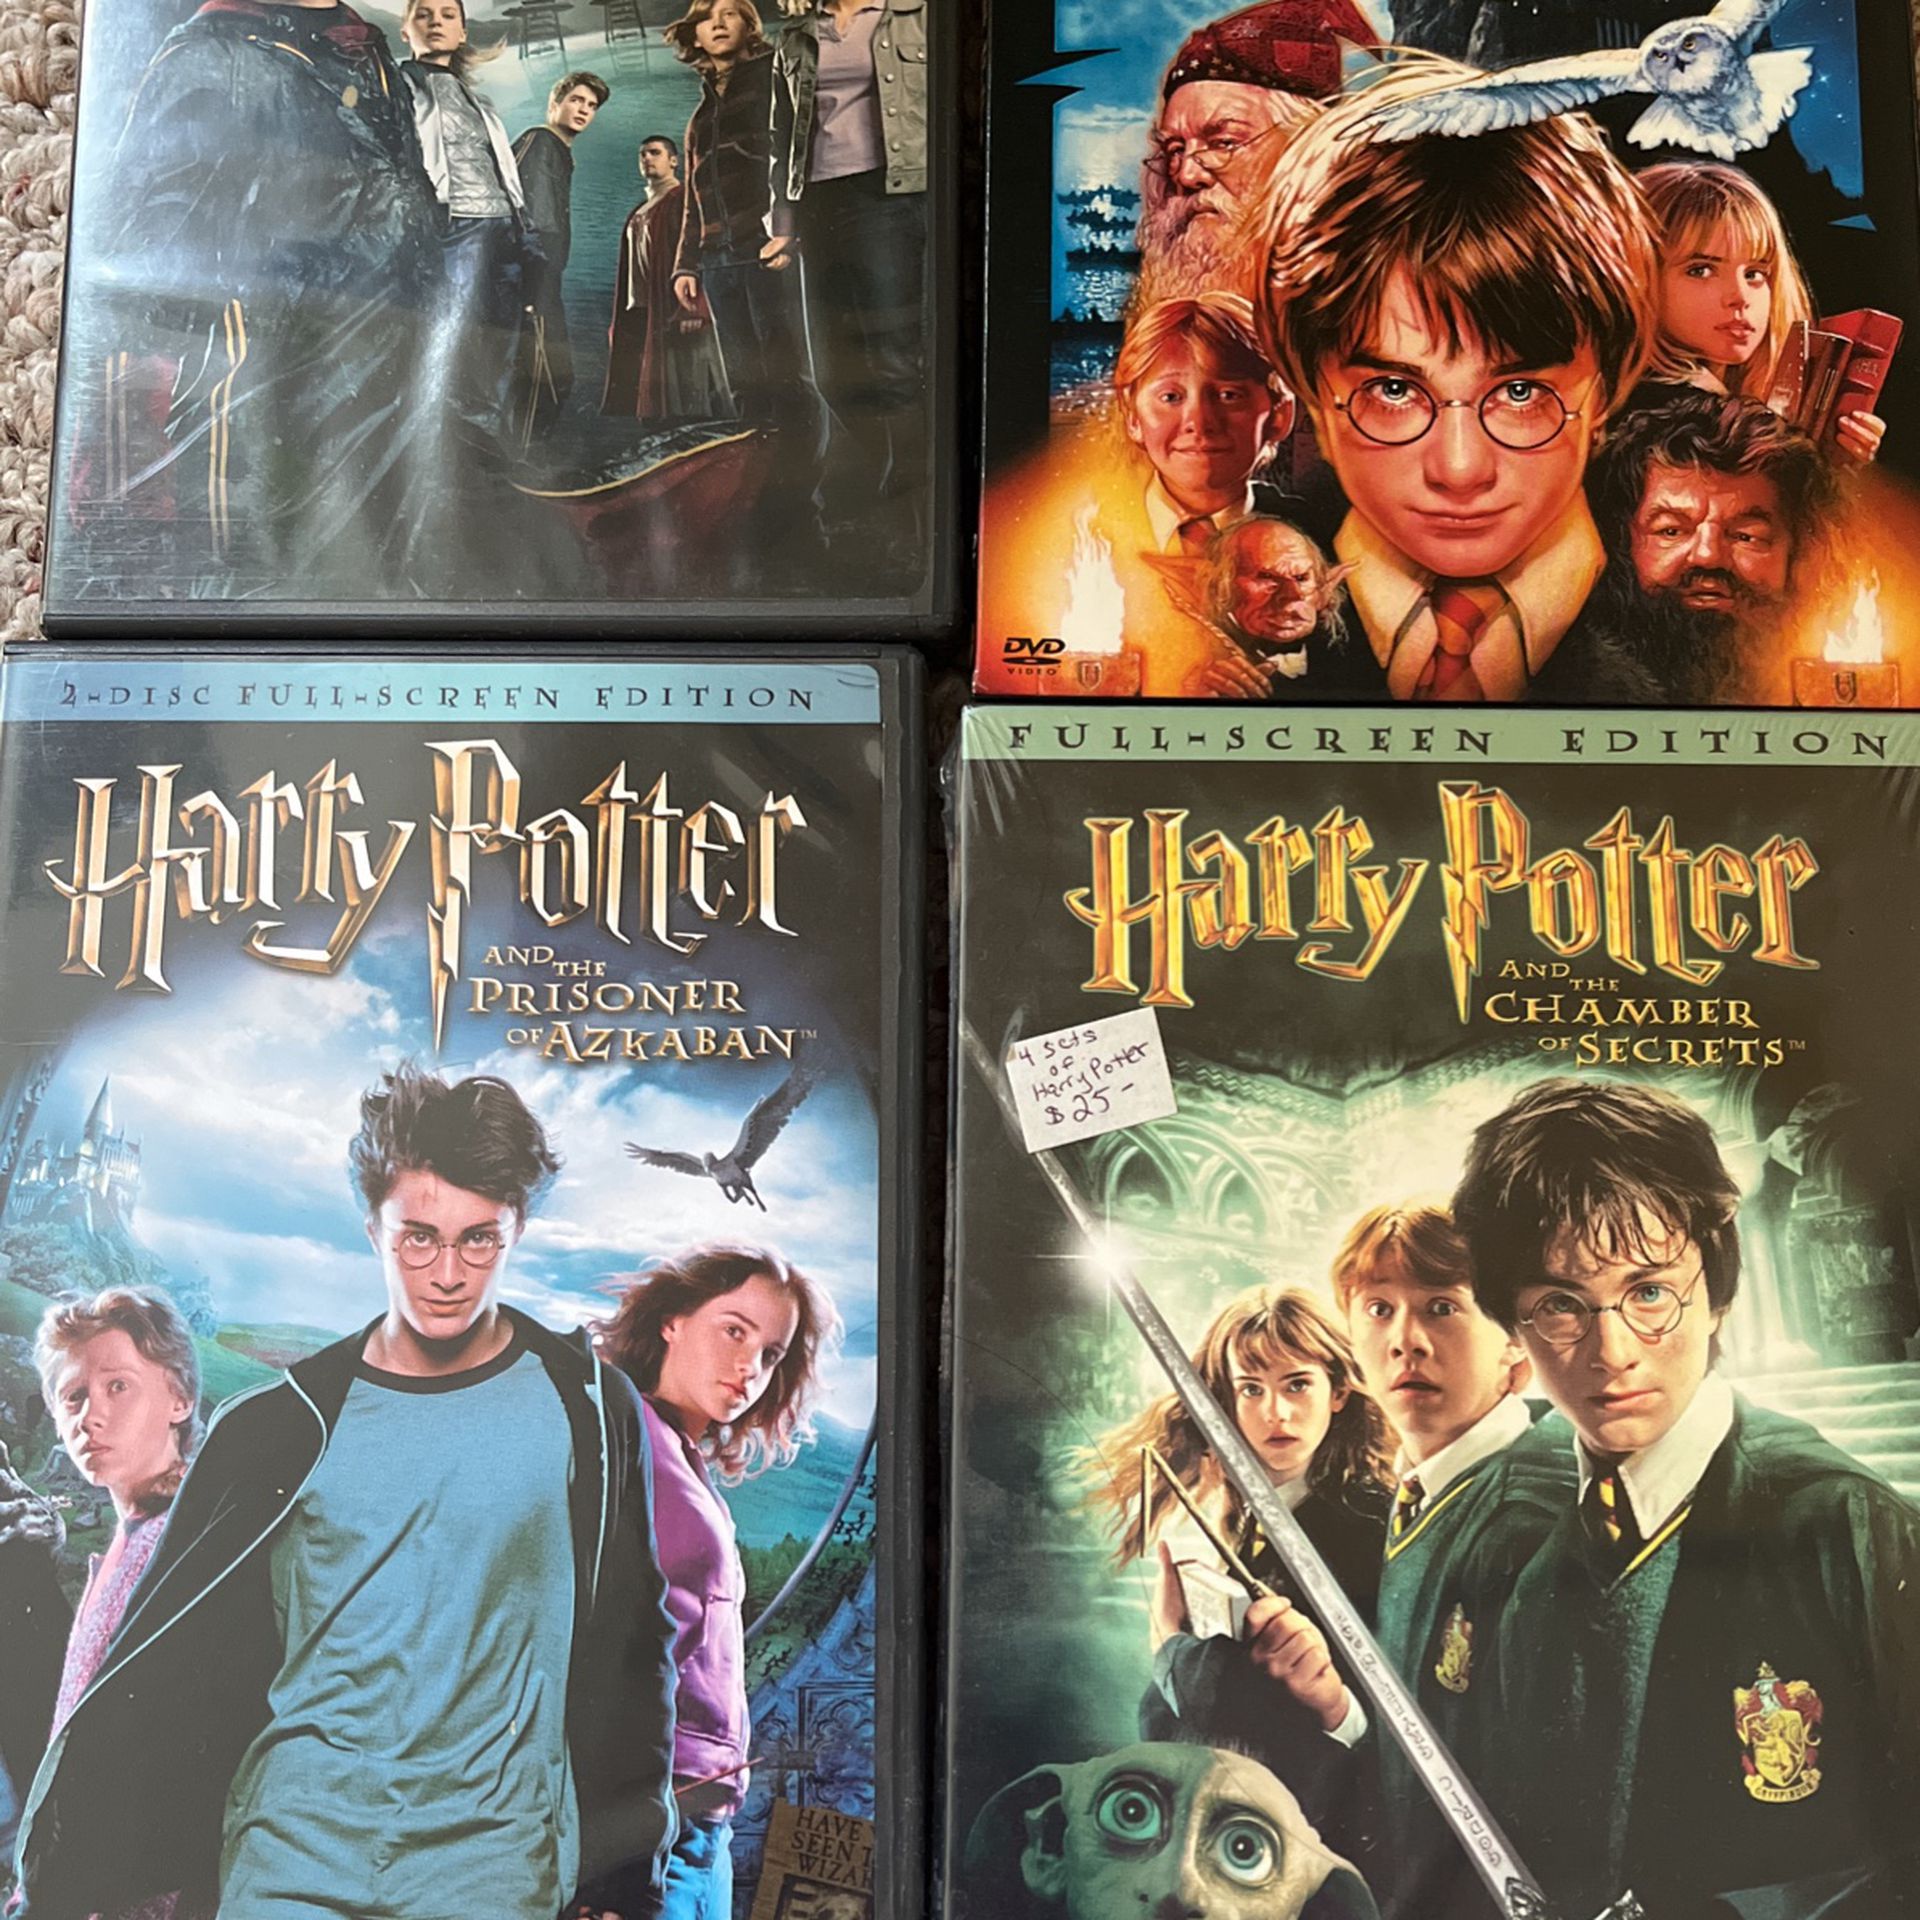 Harry Potter DVD’s